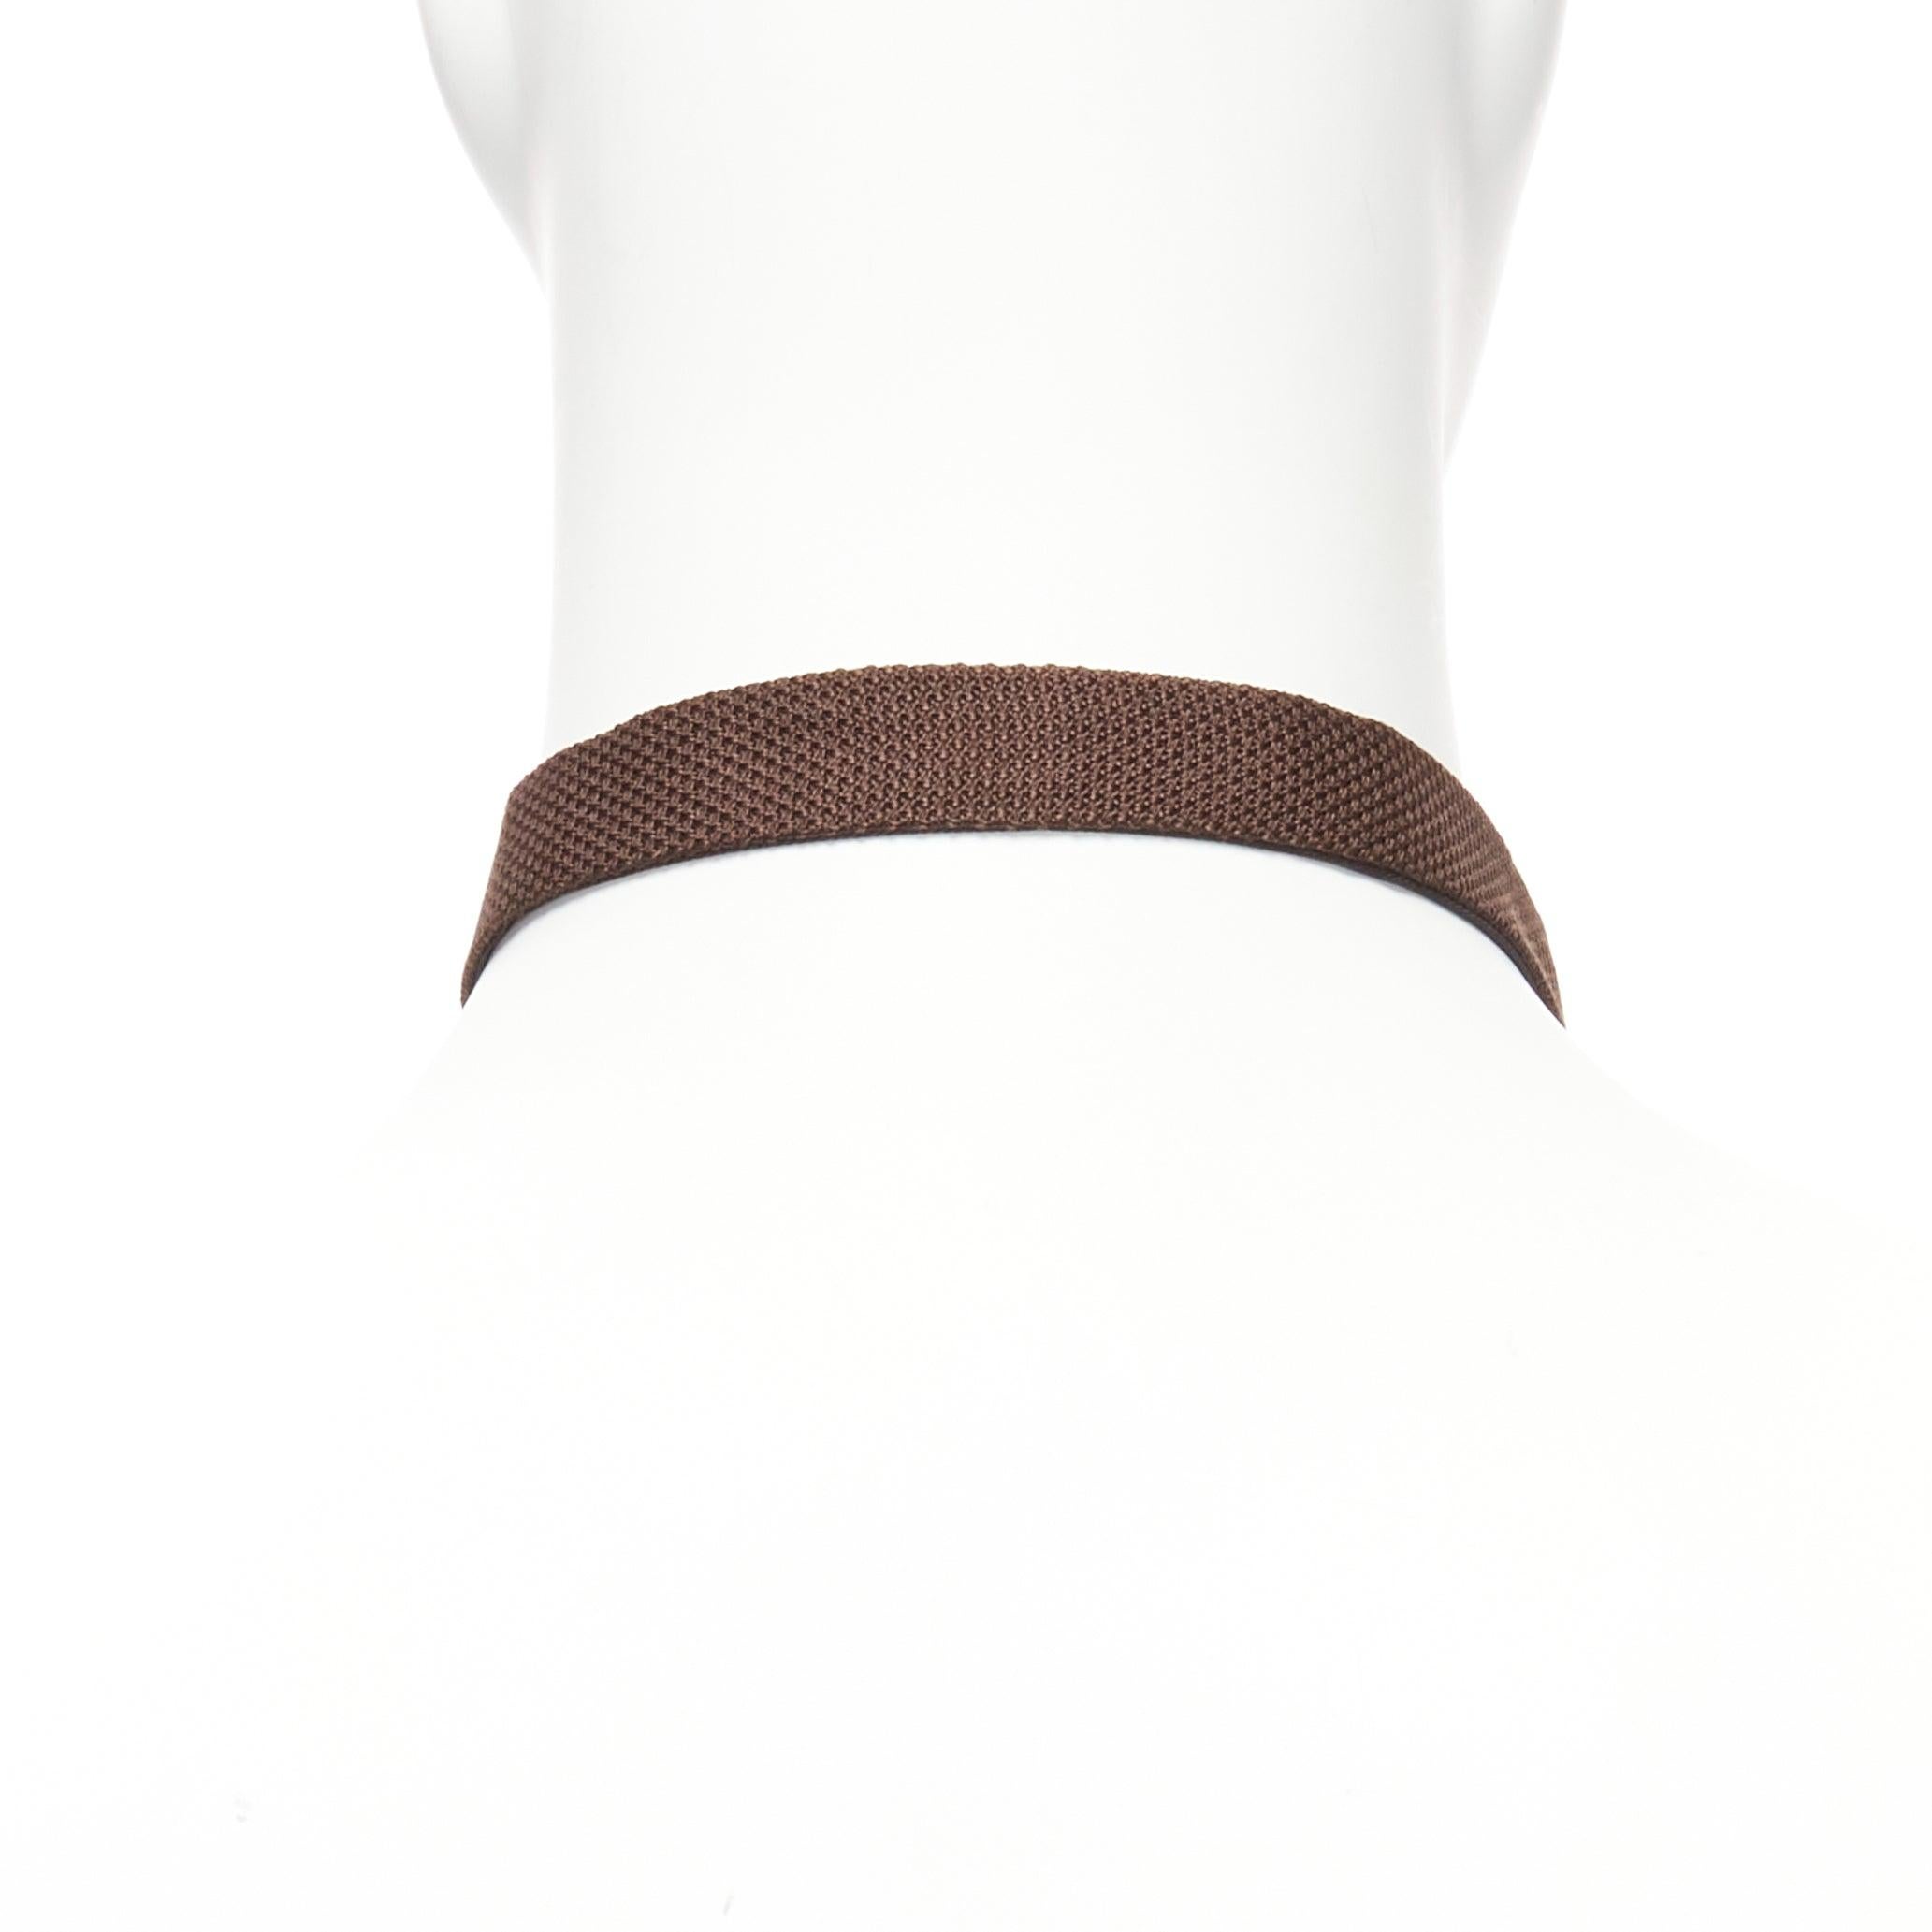 new LANVIN Alber Elbaz Brown textured fabric bow tie Adjustable Pour hommes en vente